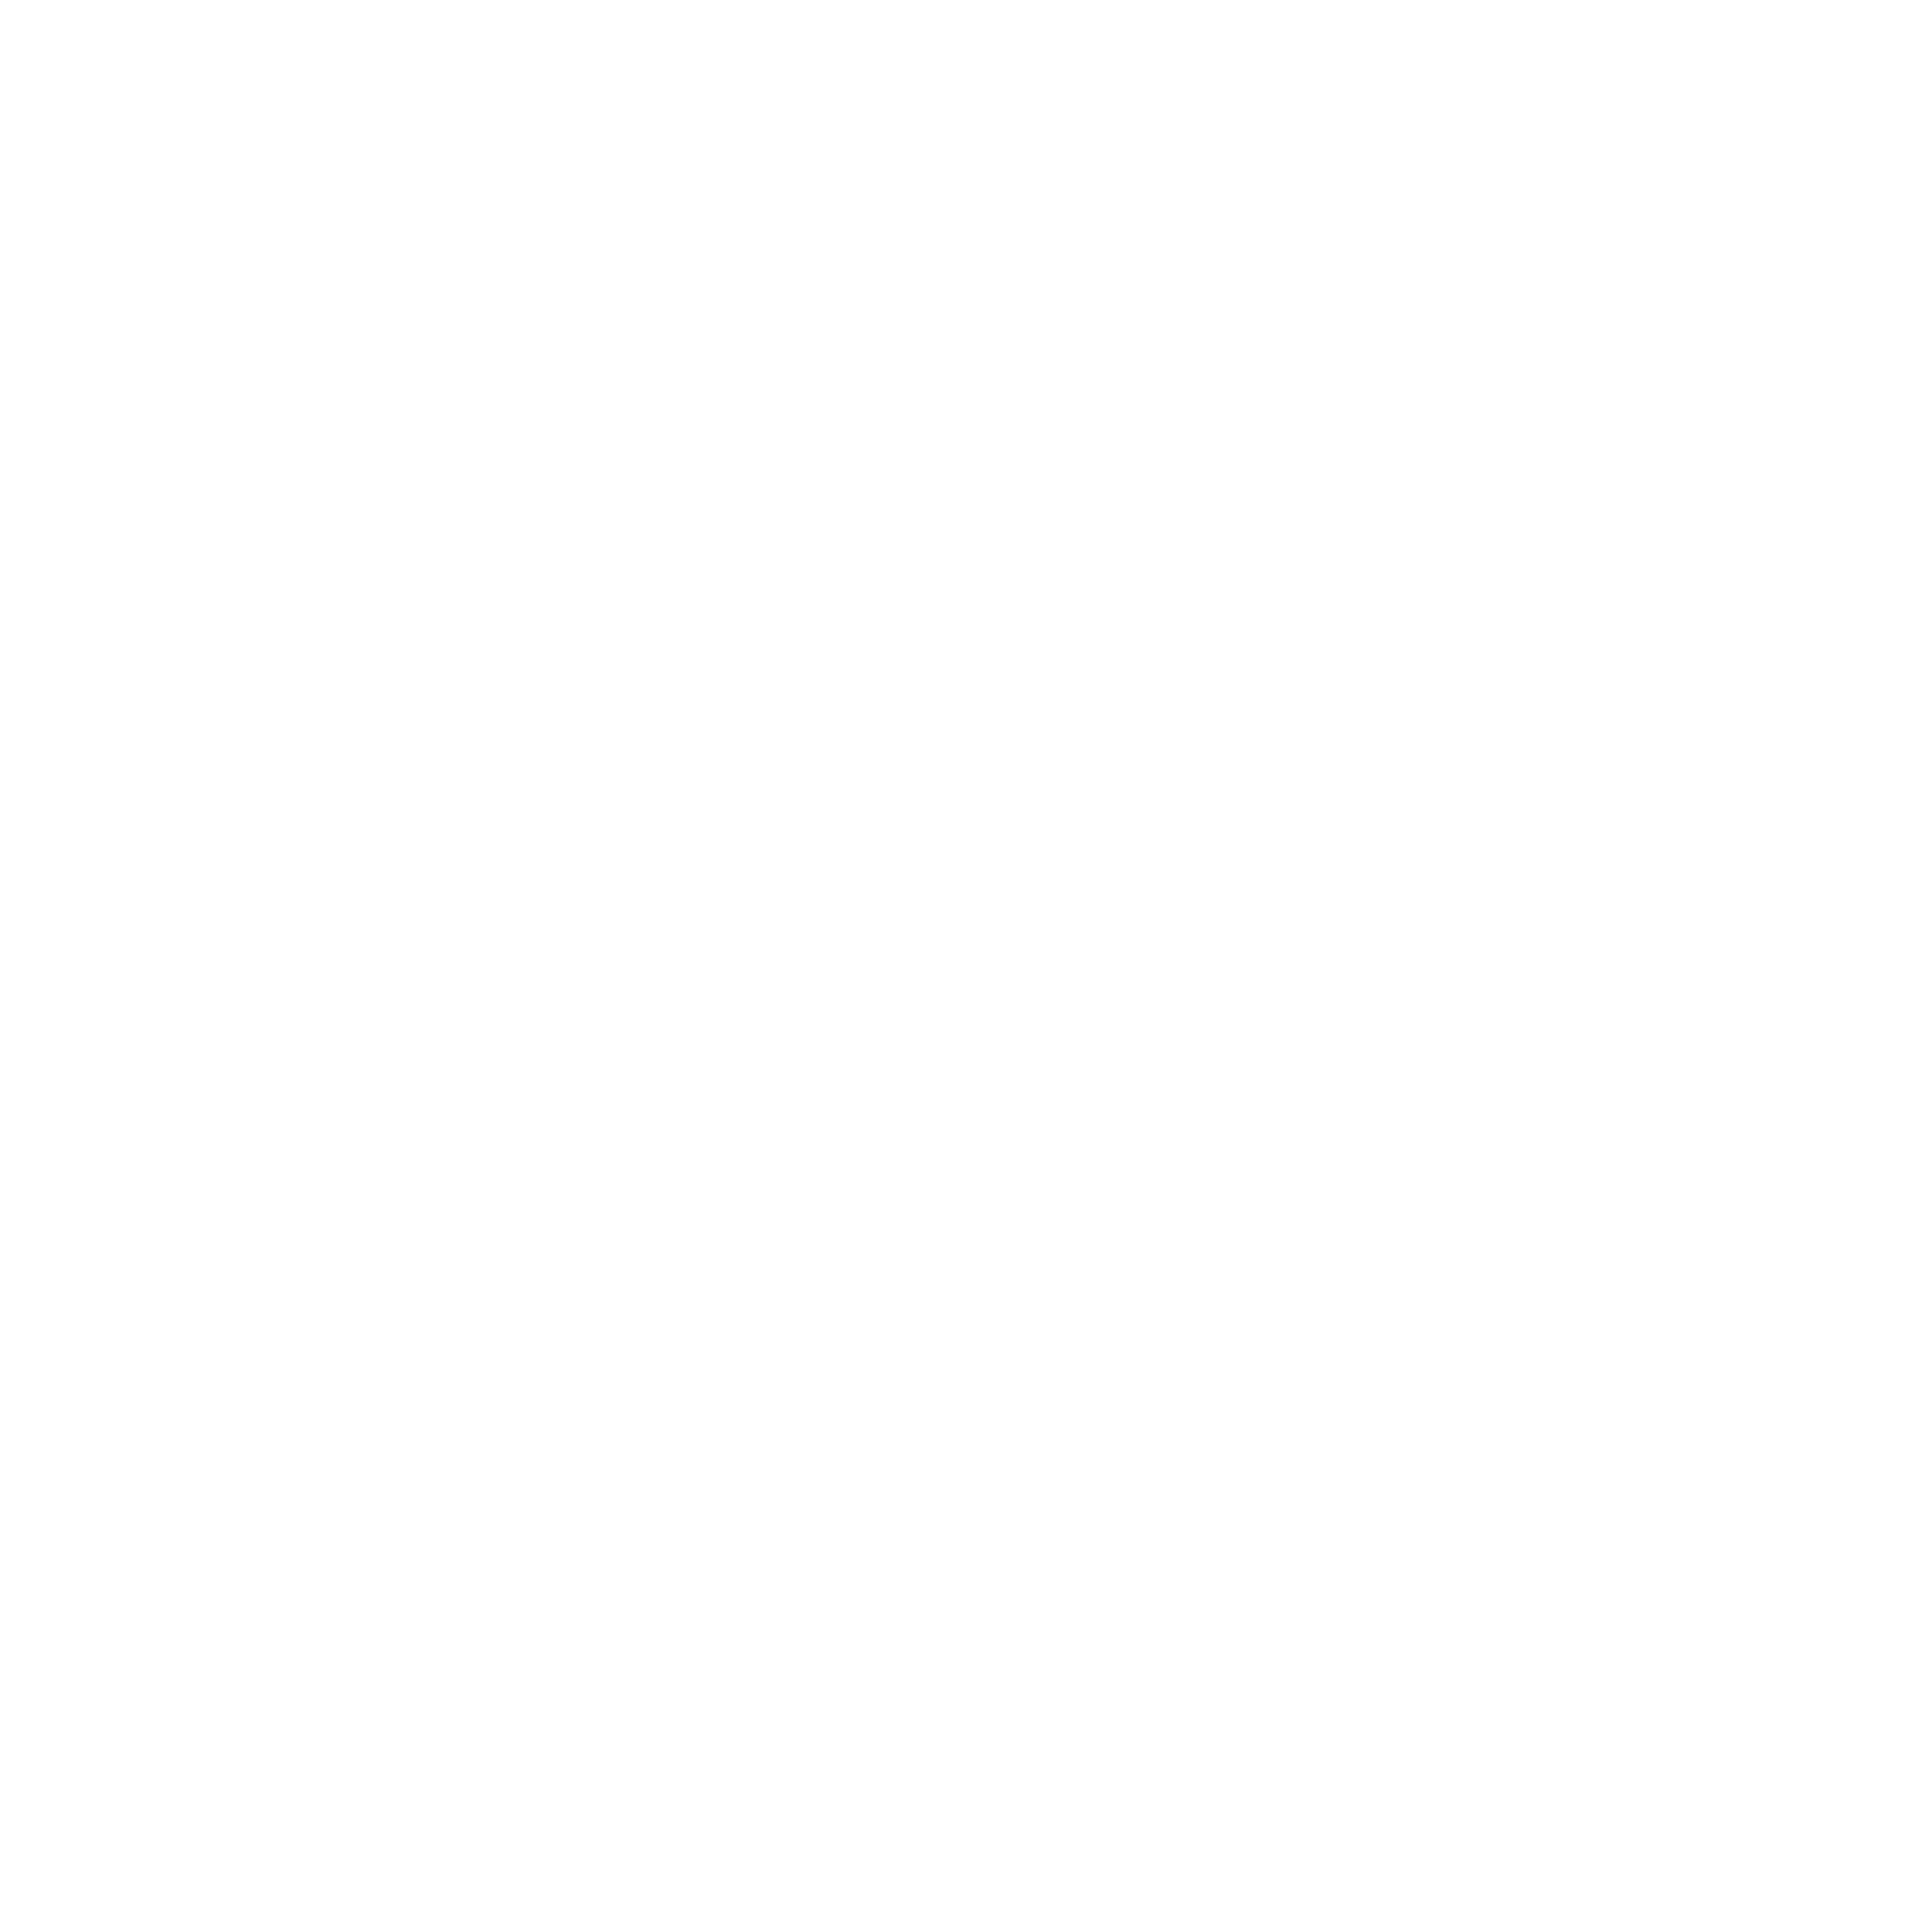 Hart-logos-black-trans14.png